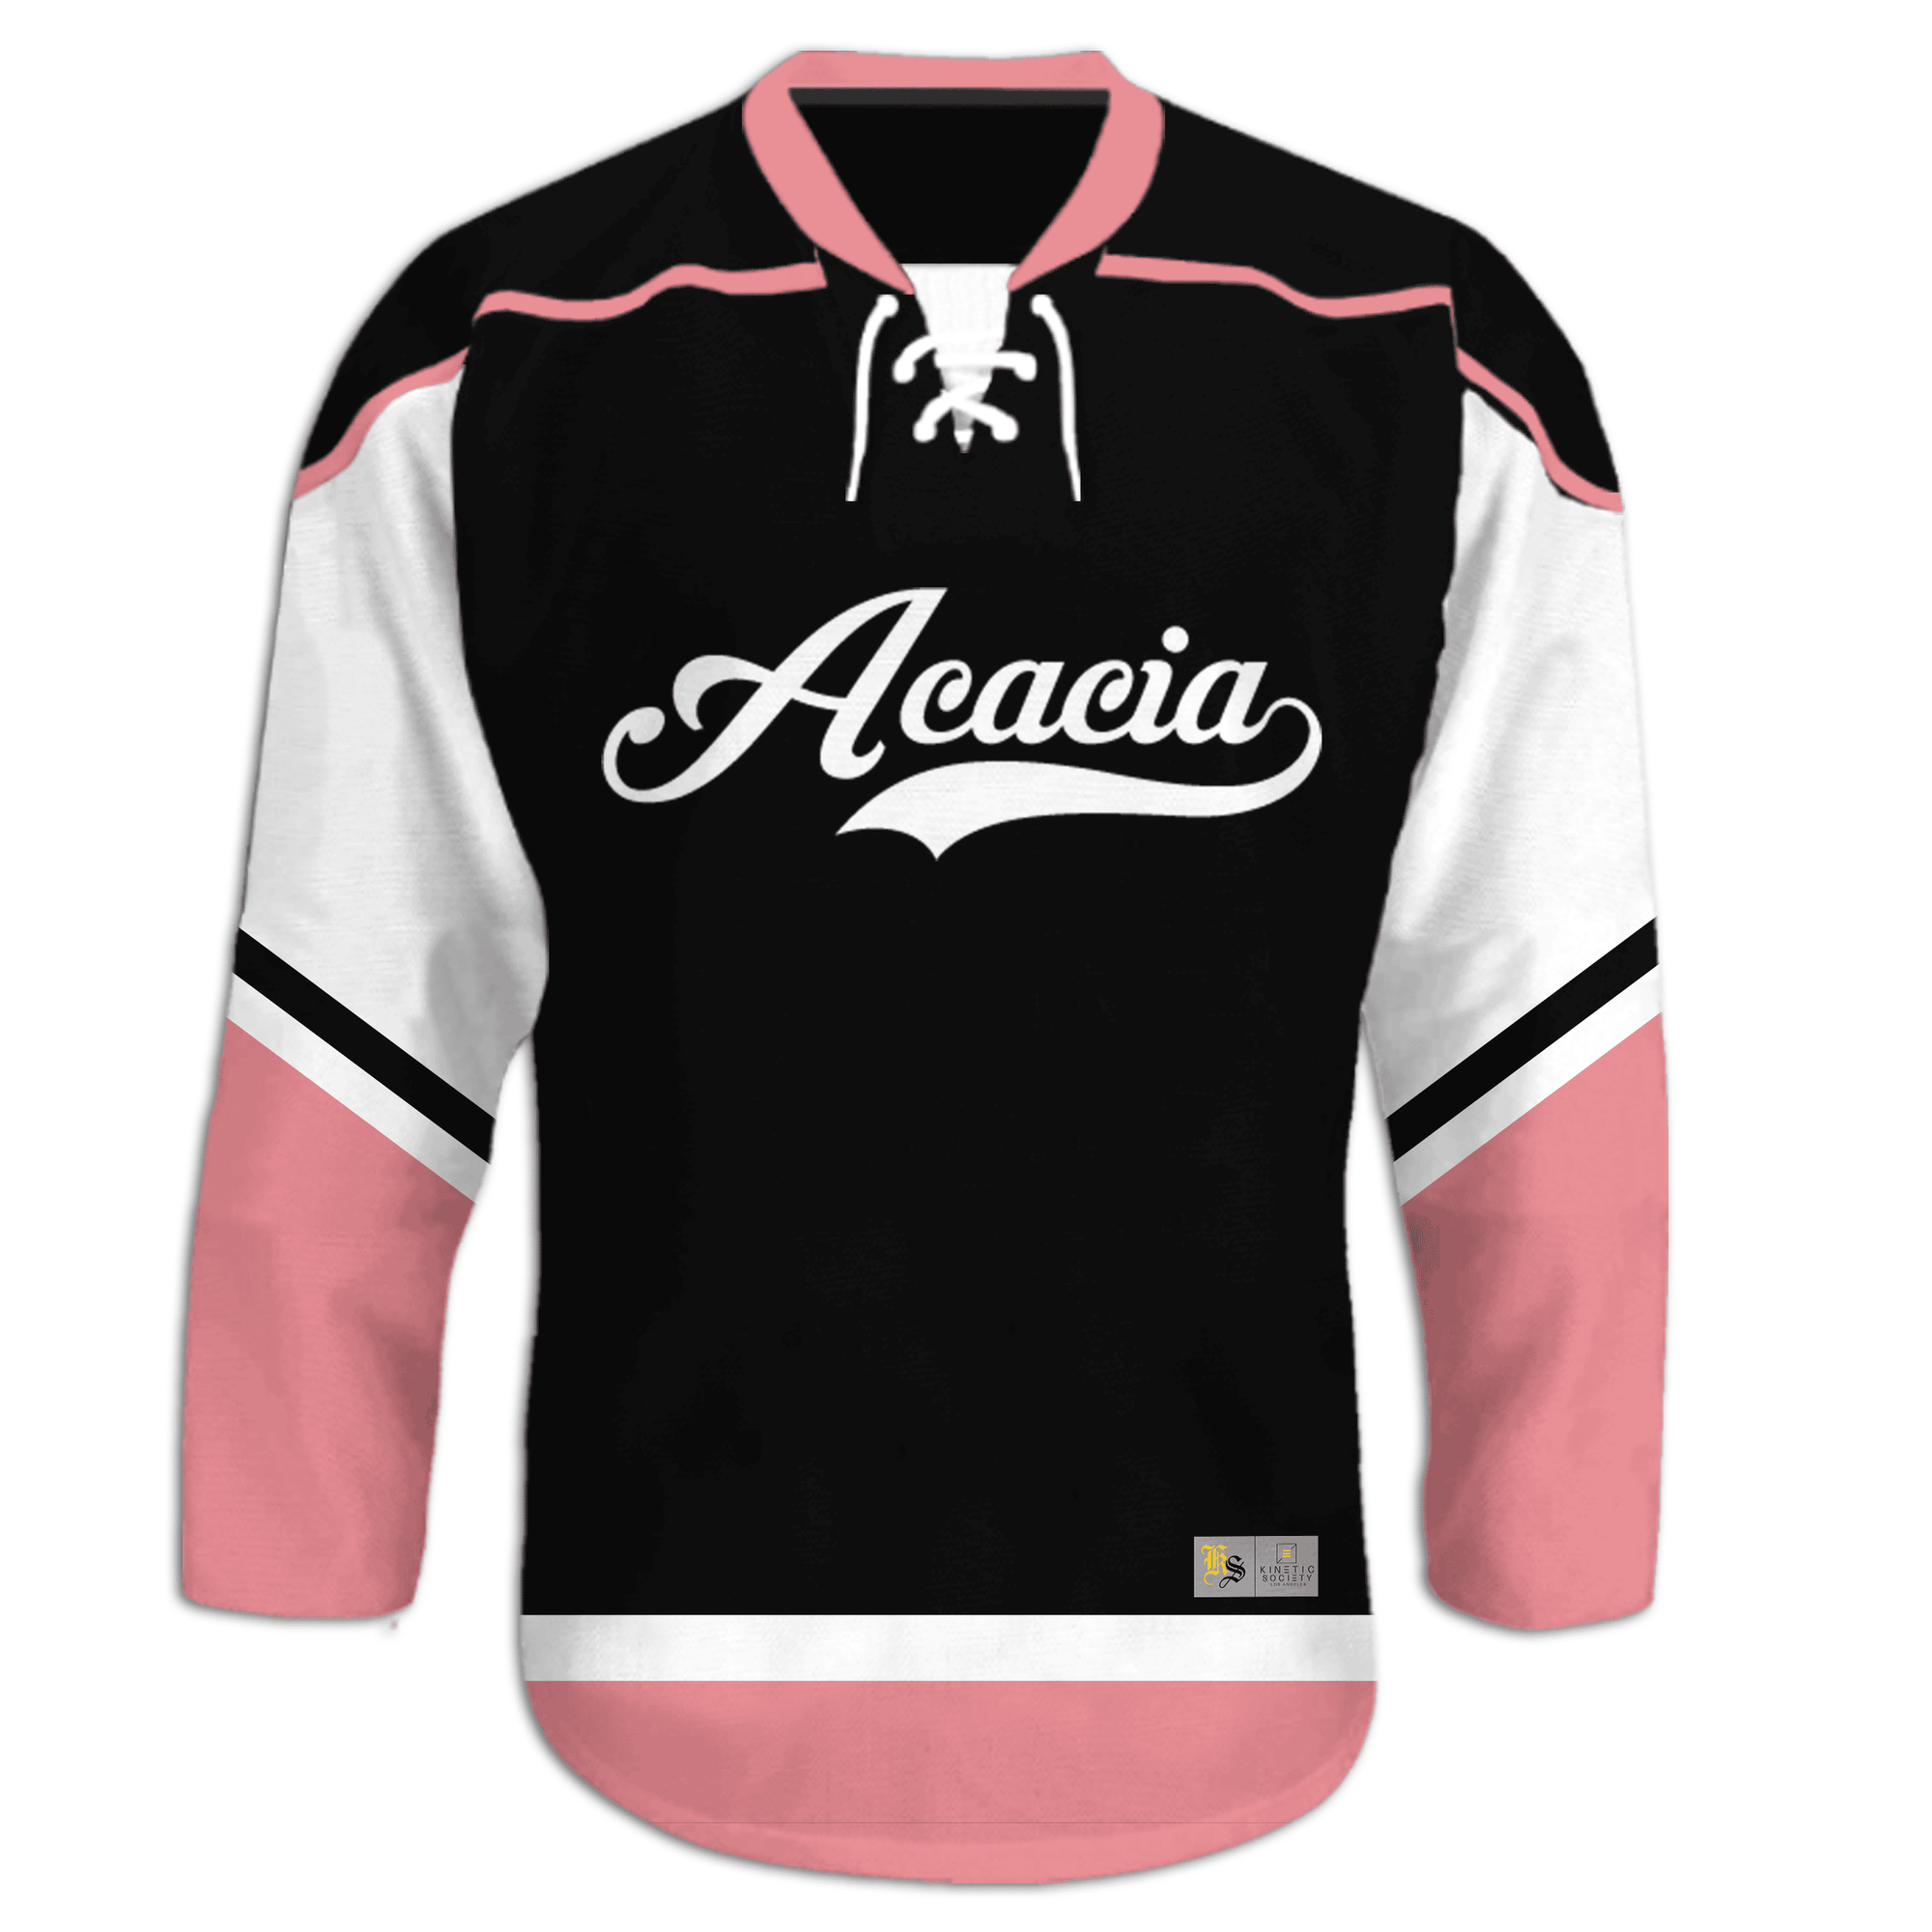 Acacia - Black Pink - Hockey Jersey